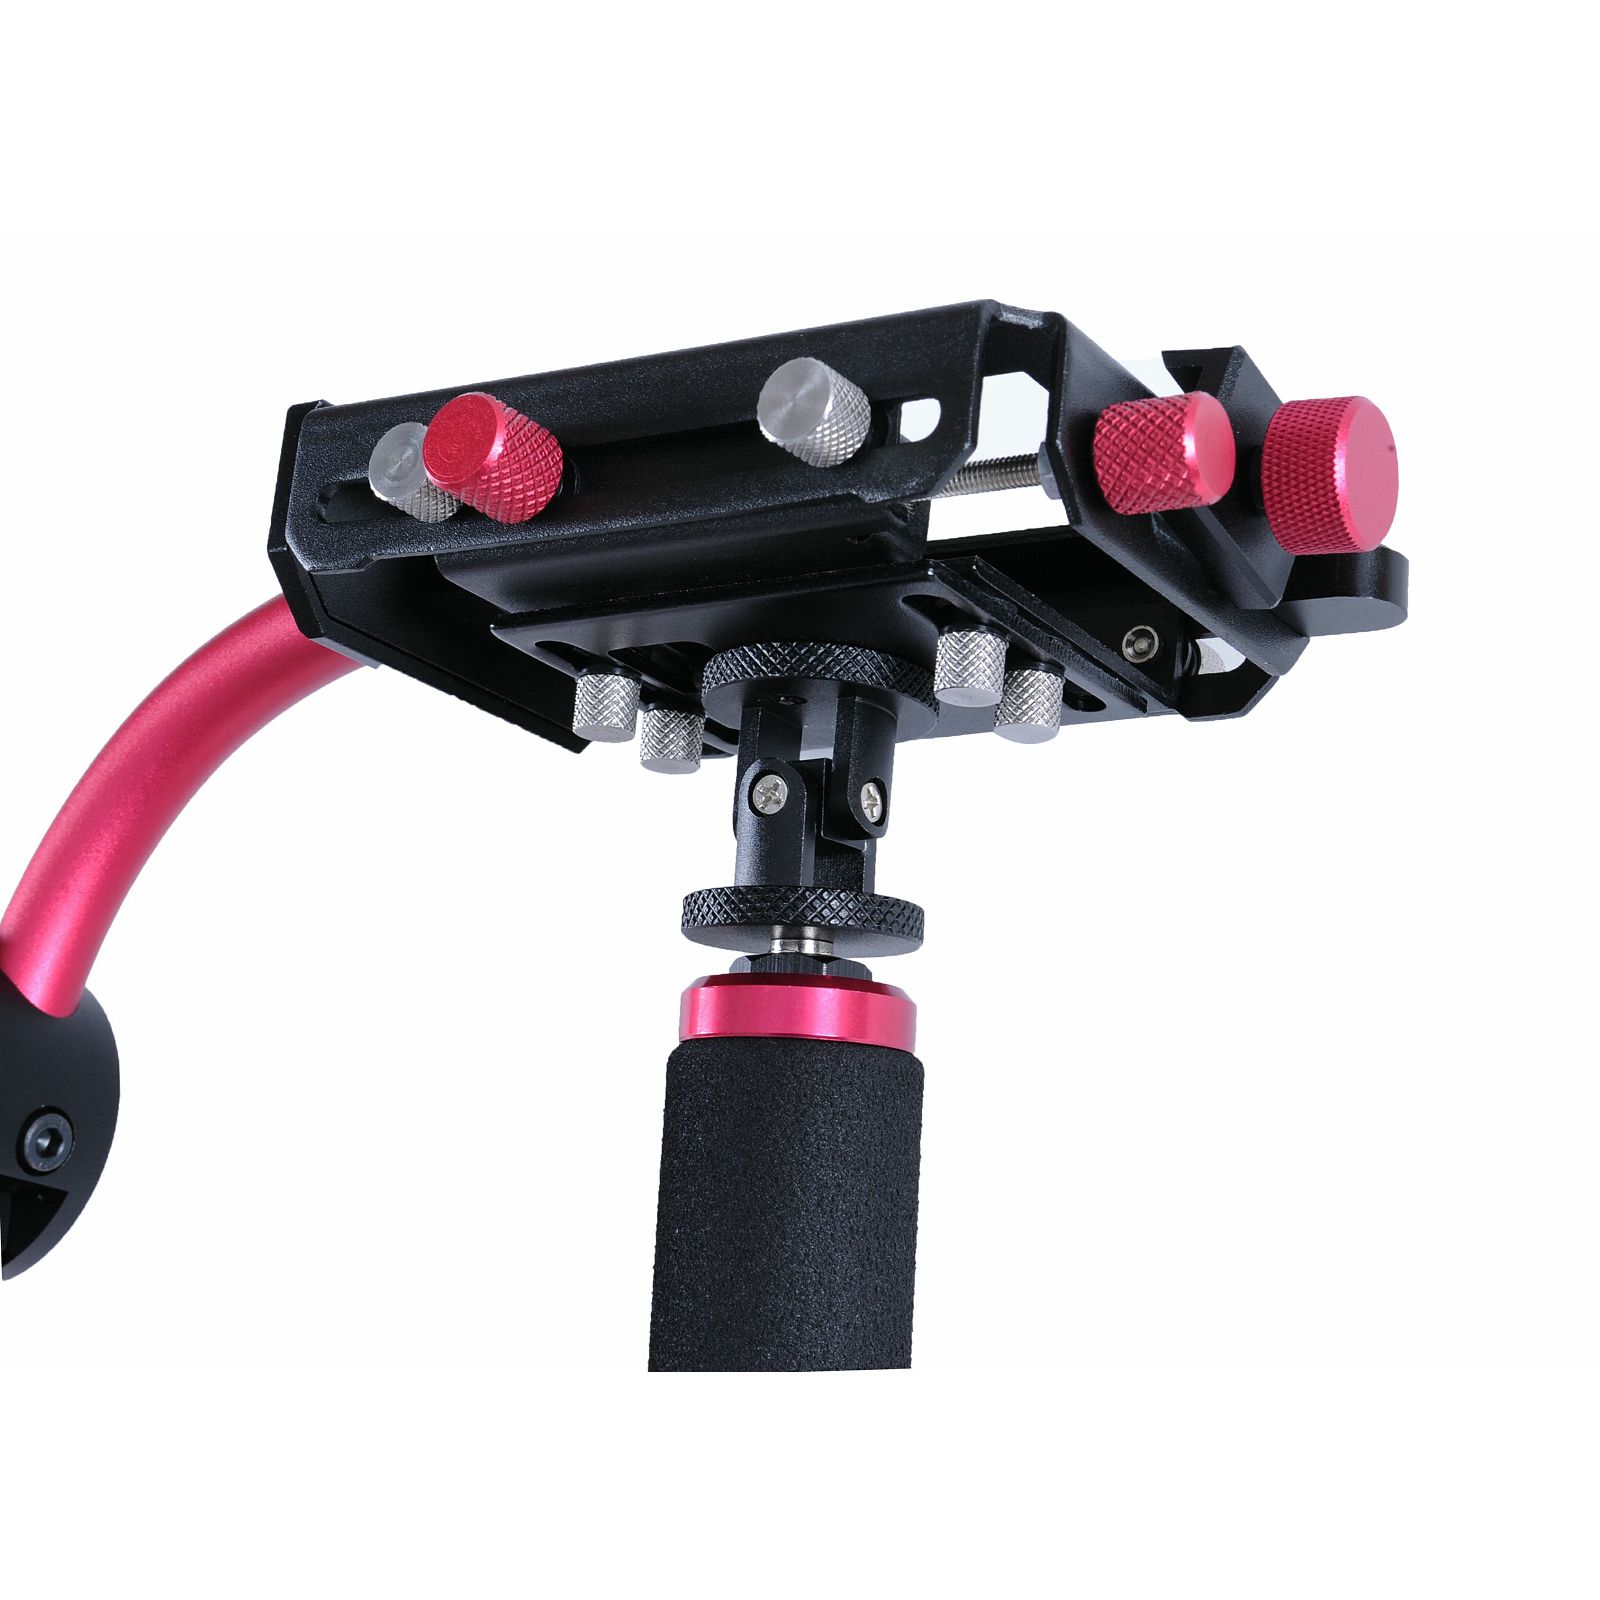 Sevenoak Camera Stabilizer SK-W01 SteadyCam stabilizator DSLR fotoaparata i kamere za video snimanje s utegom